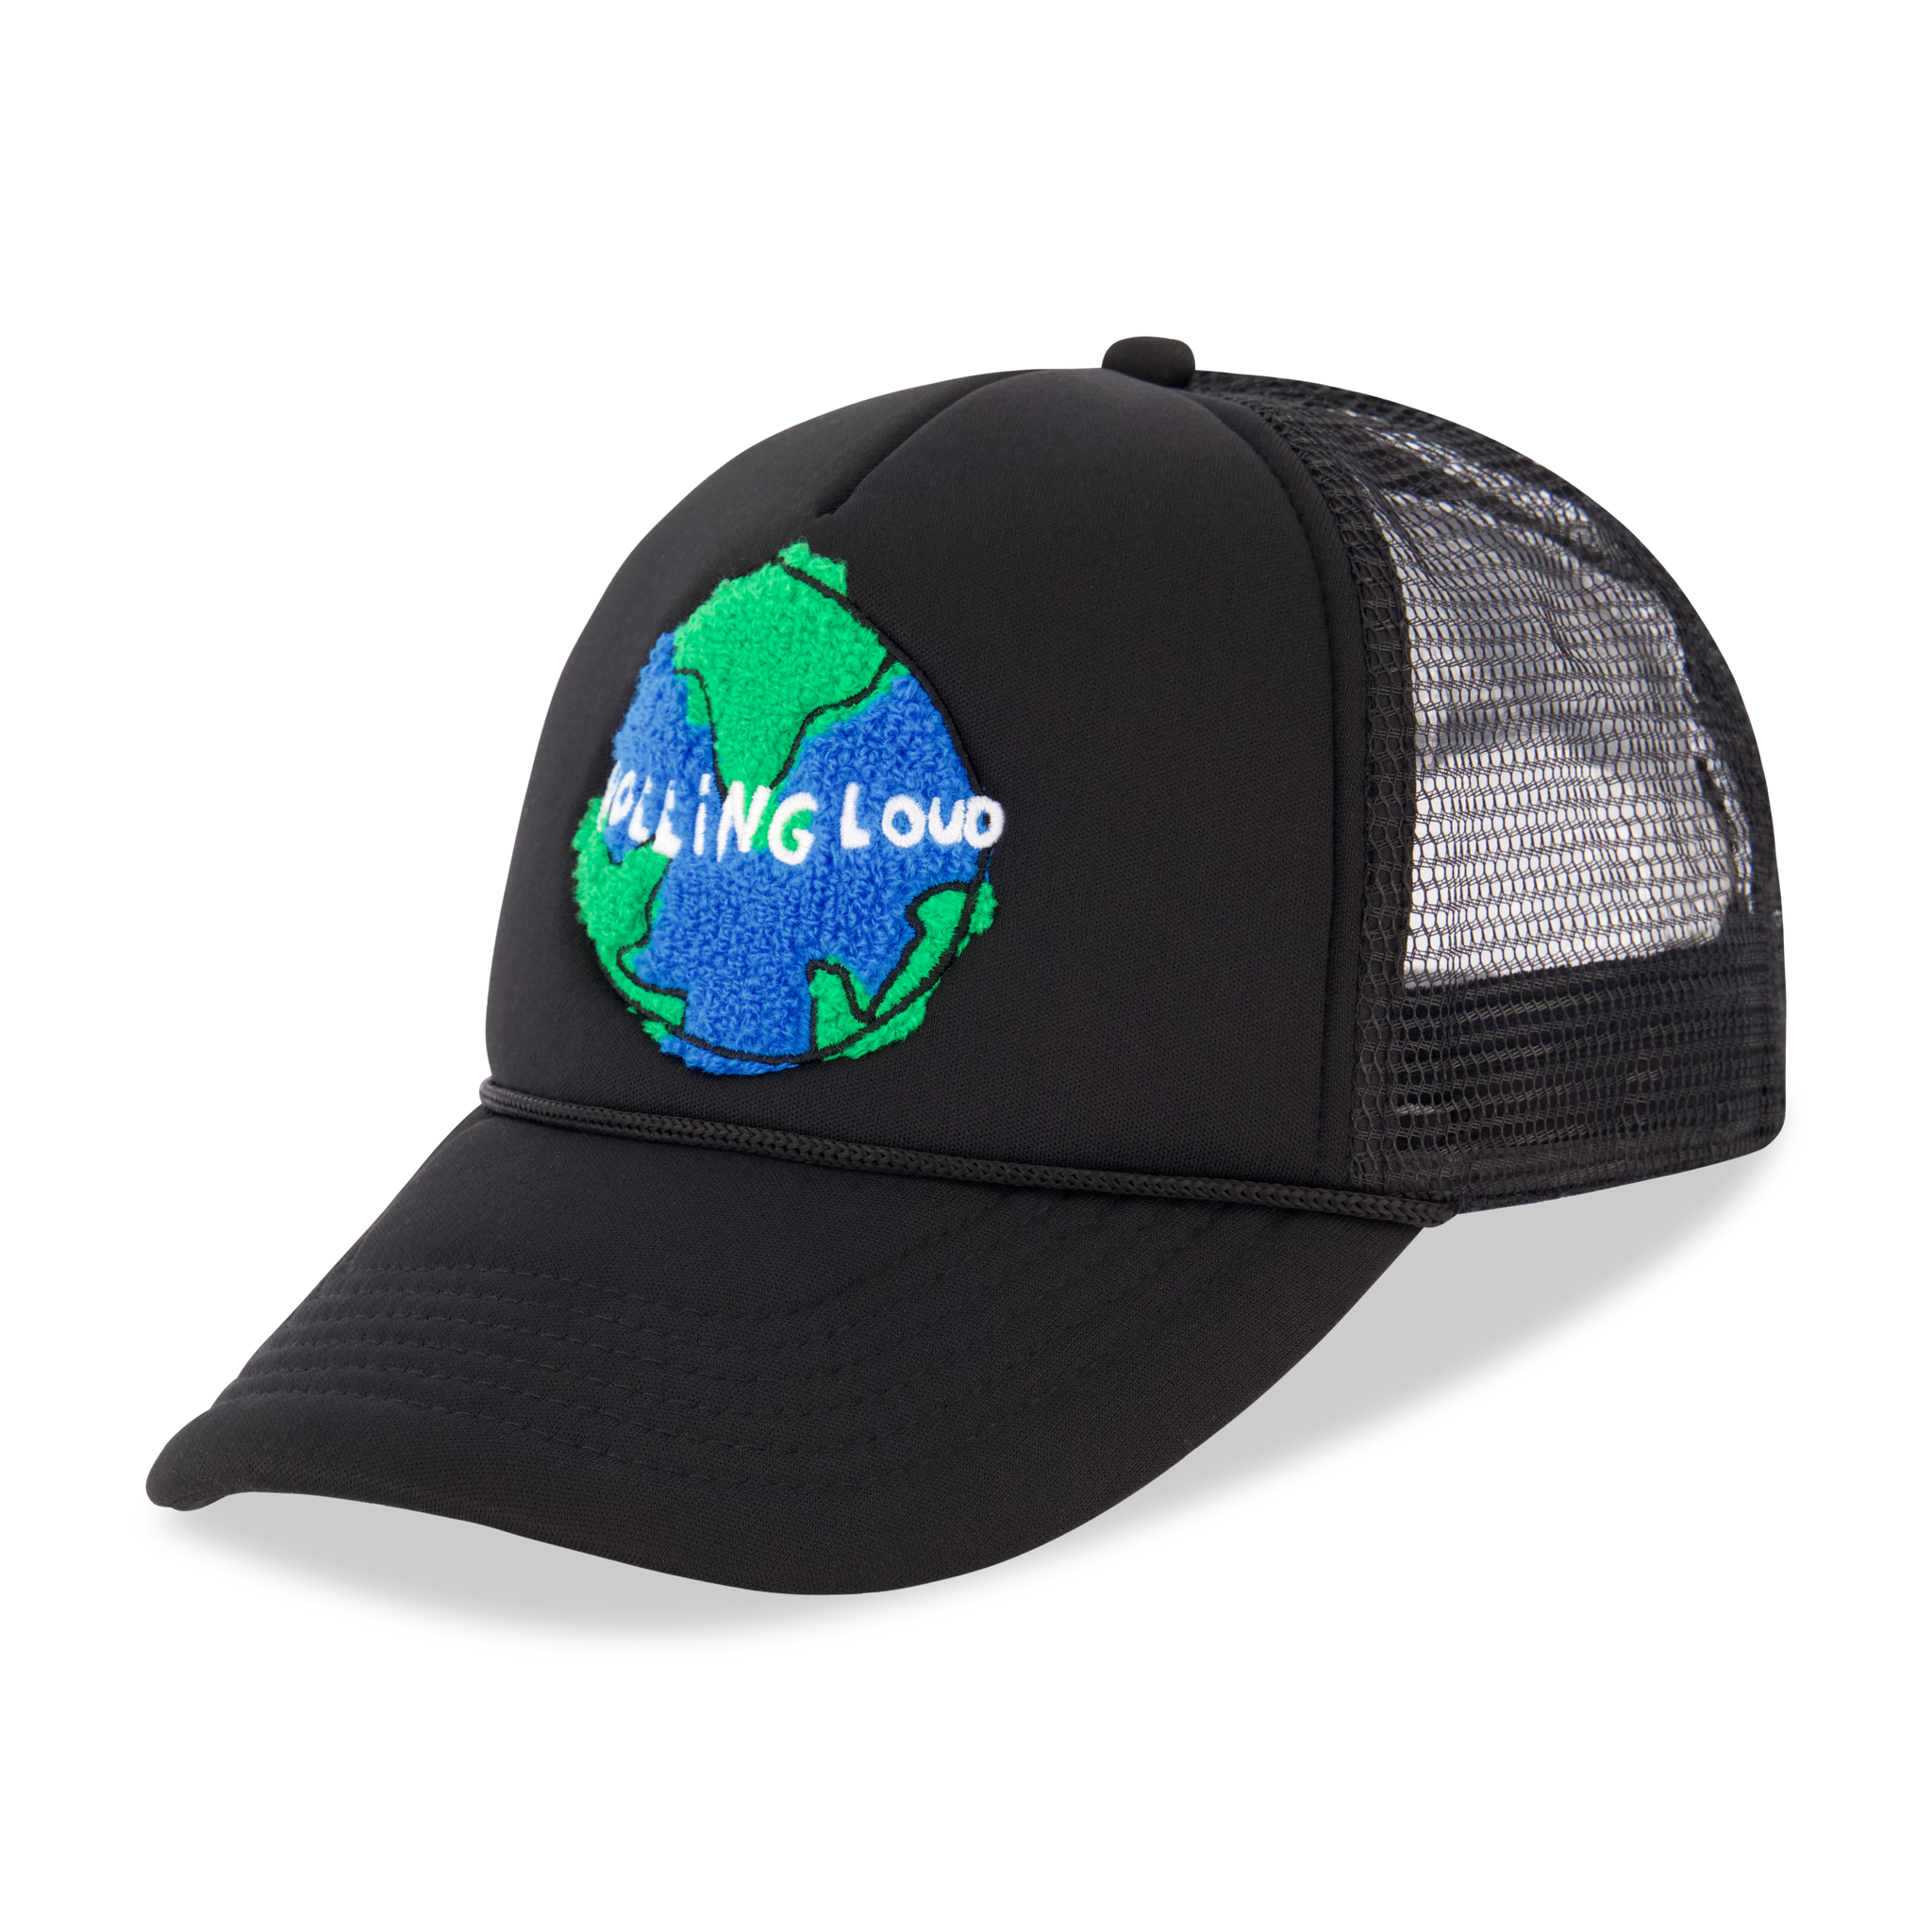 Chenille World Tour Black Trucker Hat